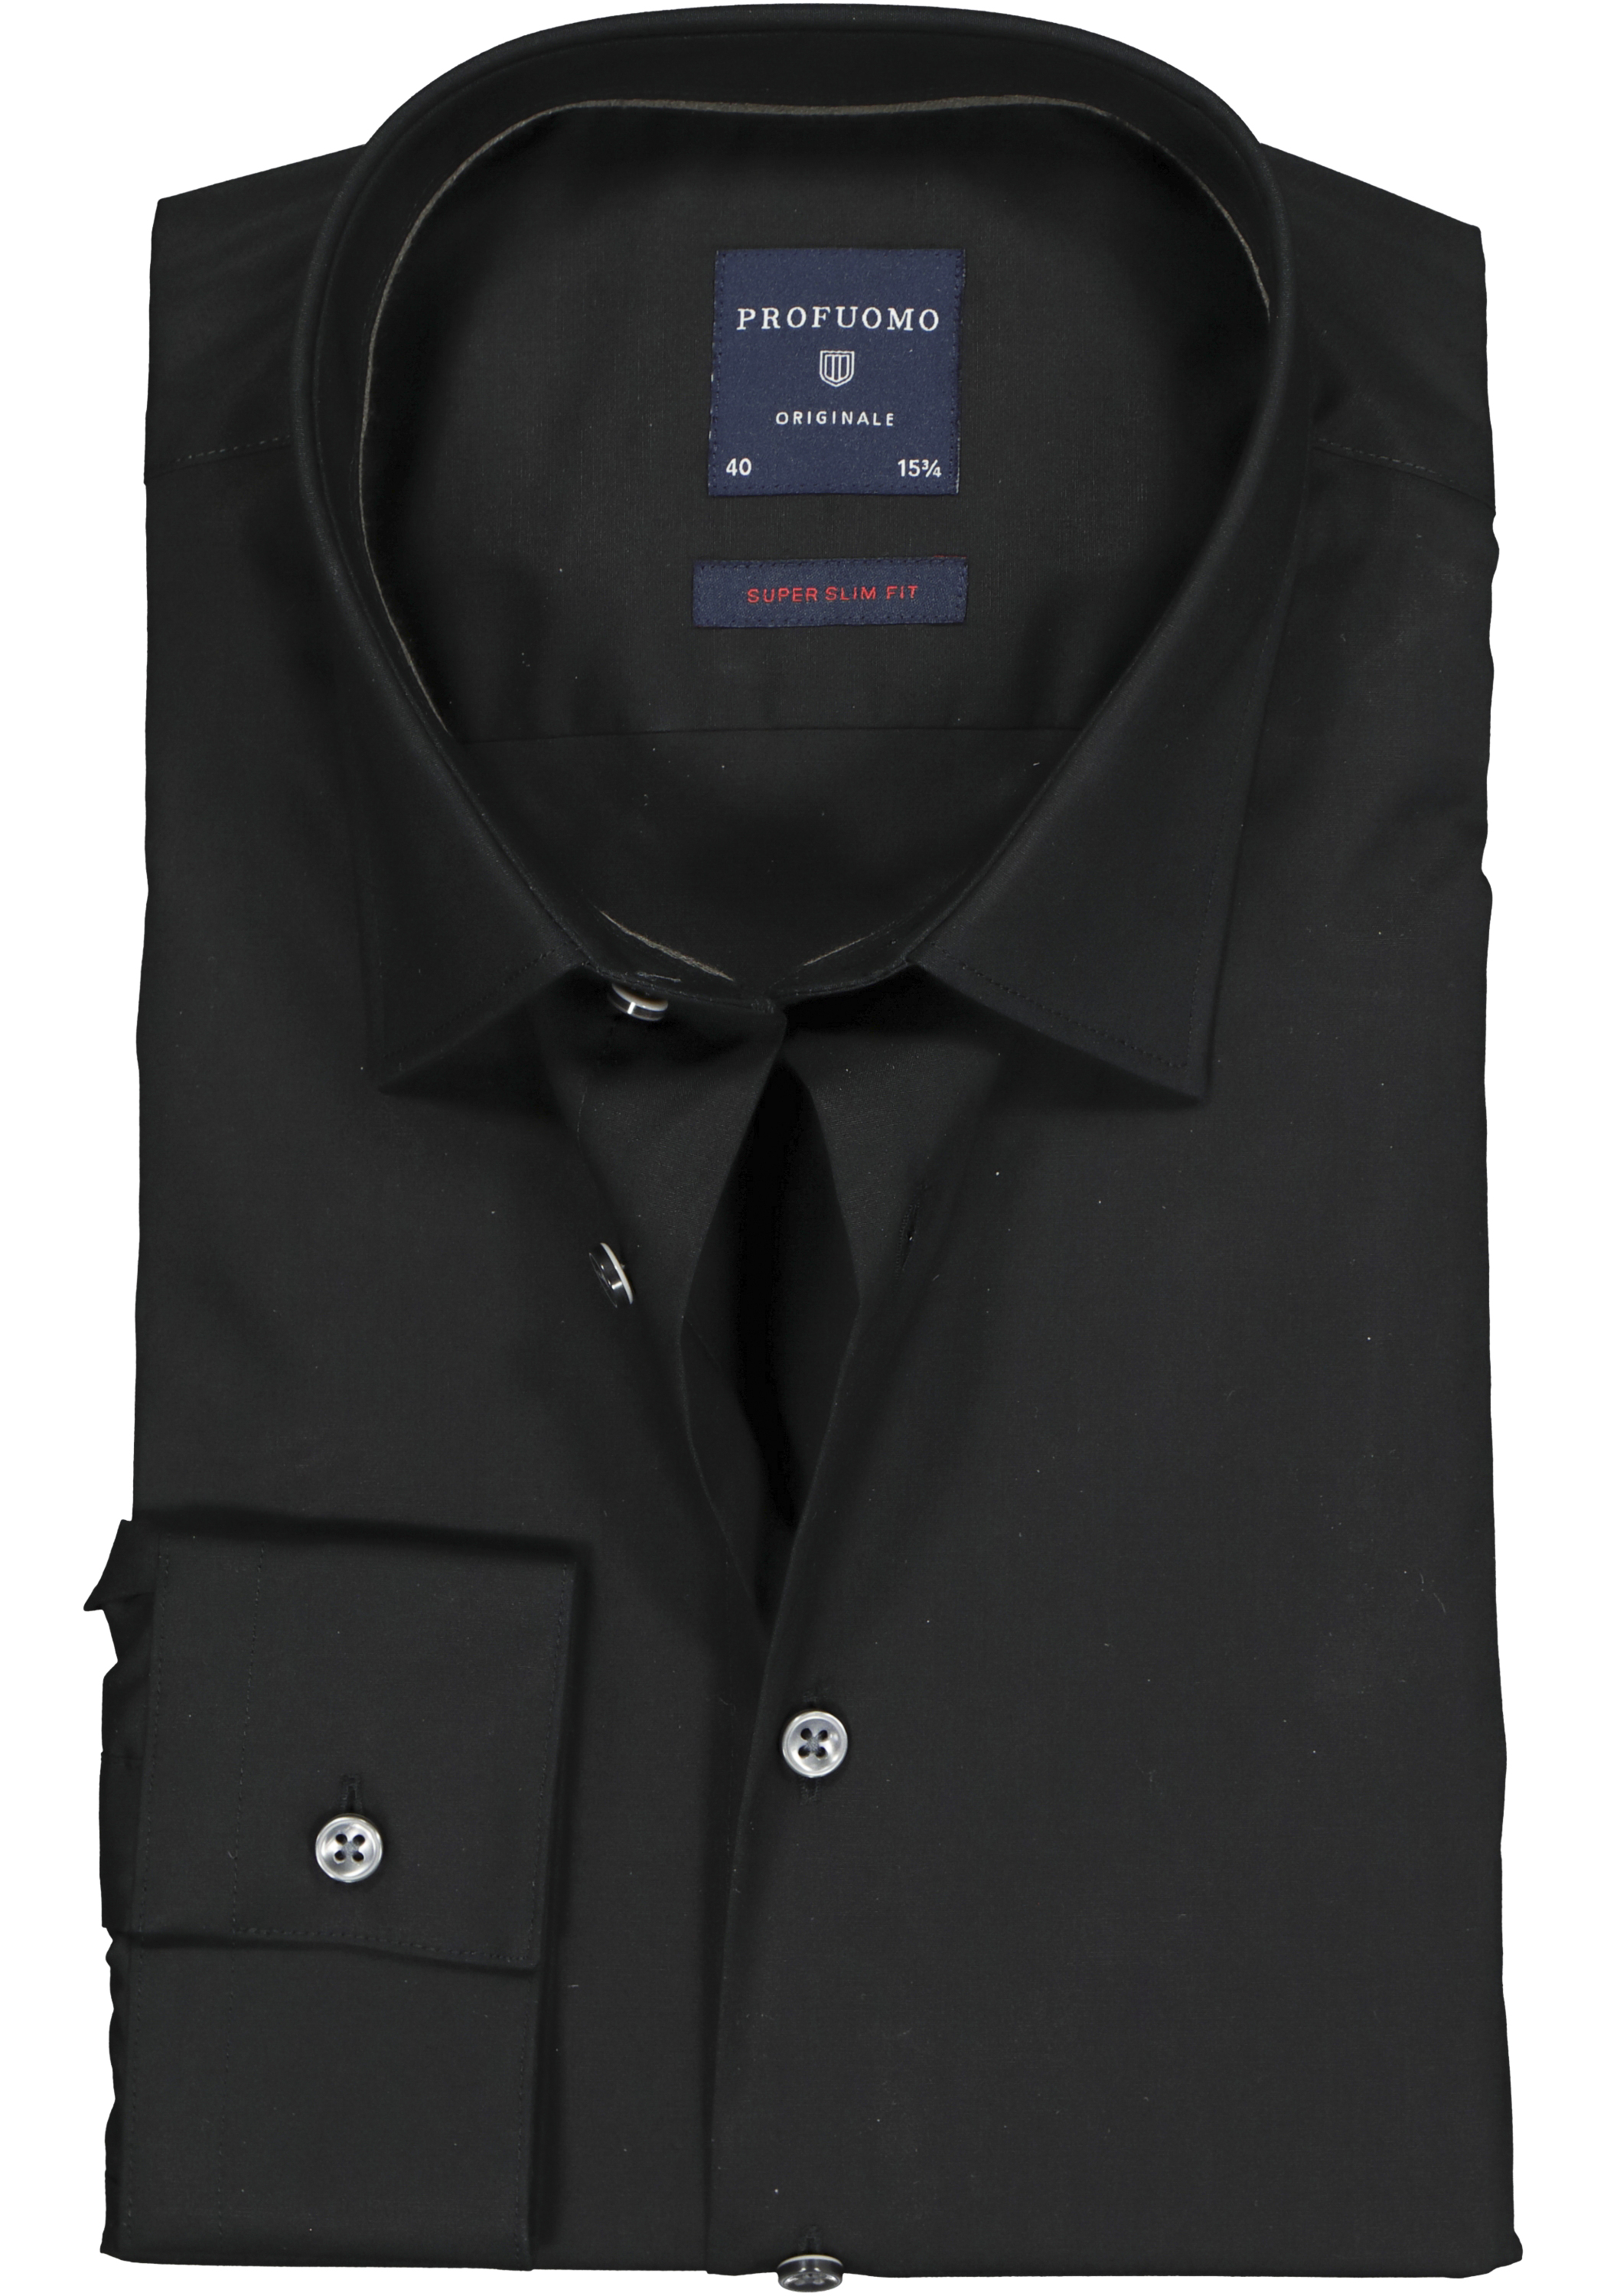 Profuomo Originale super slim fit overhemd, stretch poplin, zwart